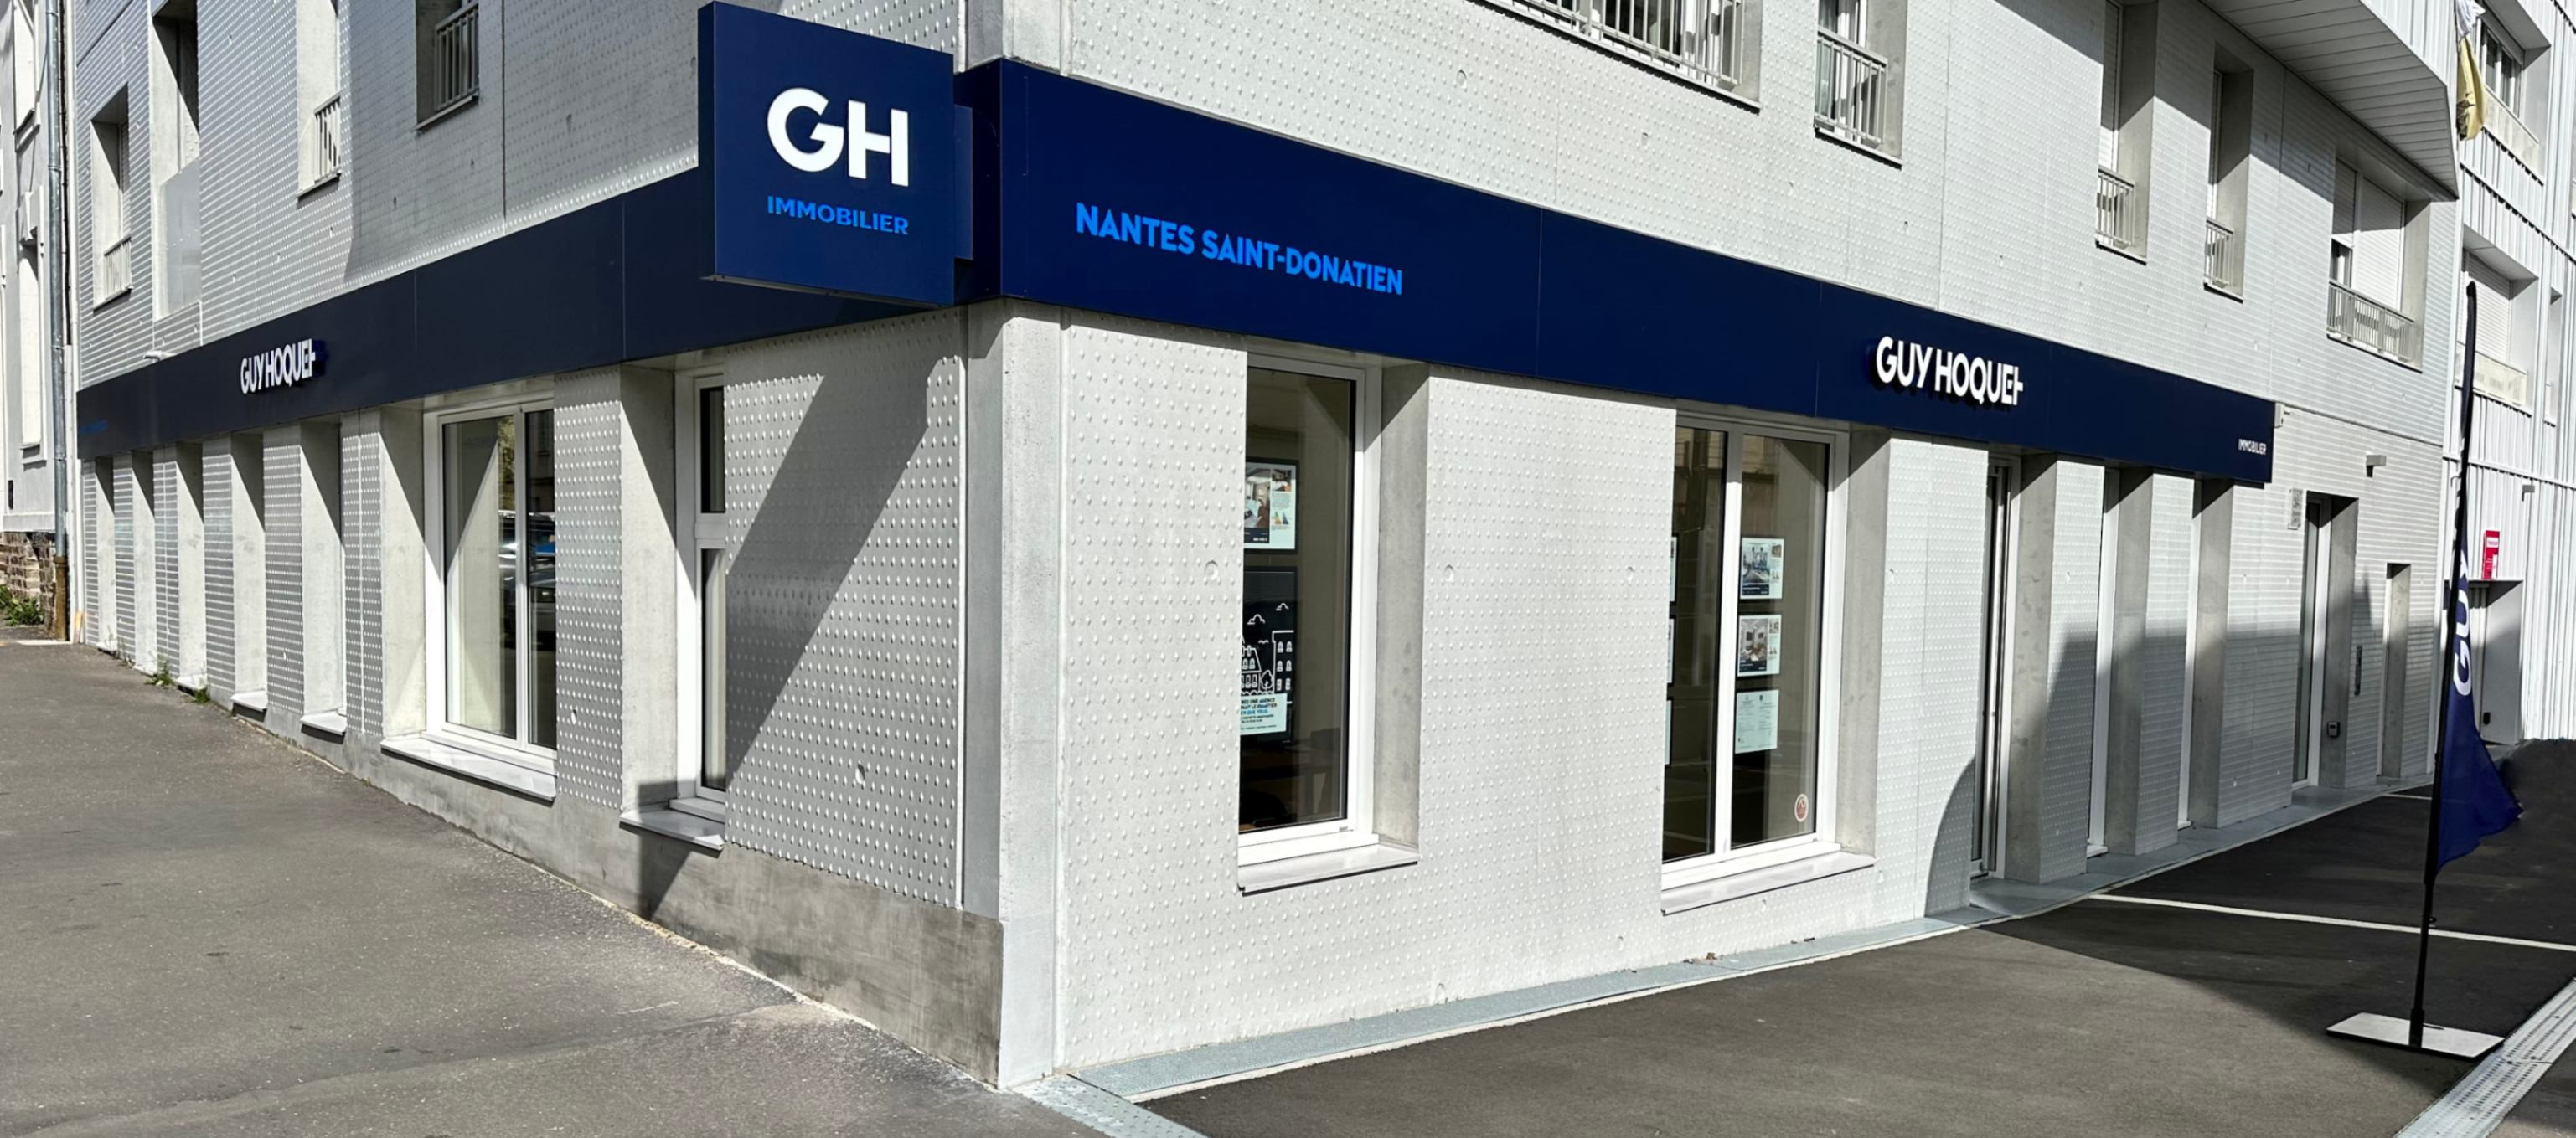 Agence Guy Hoquet NANTES SAINT-DONATIEN